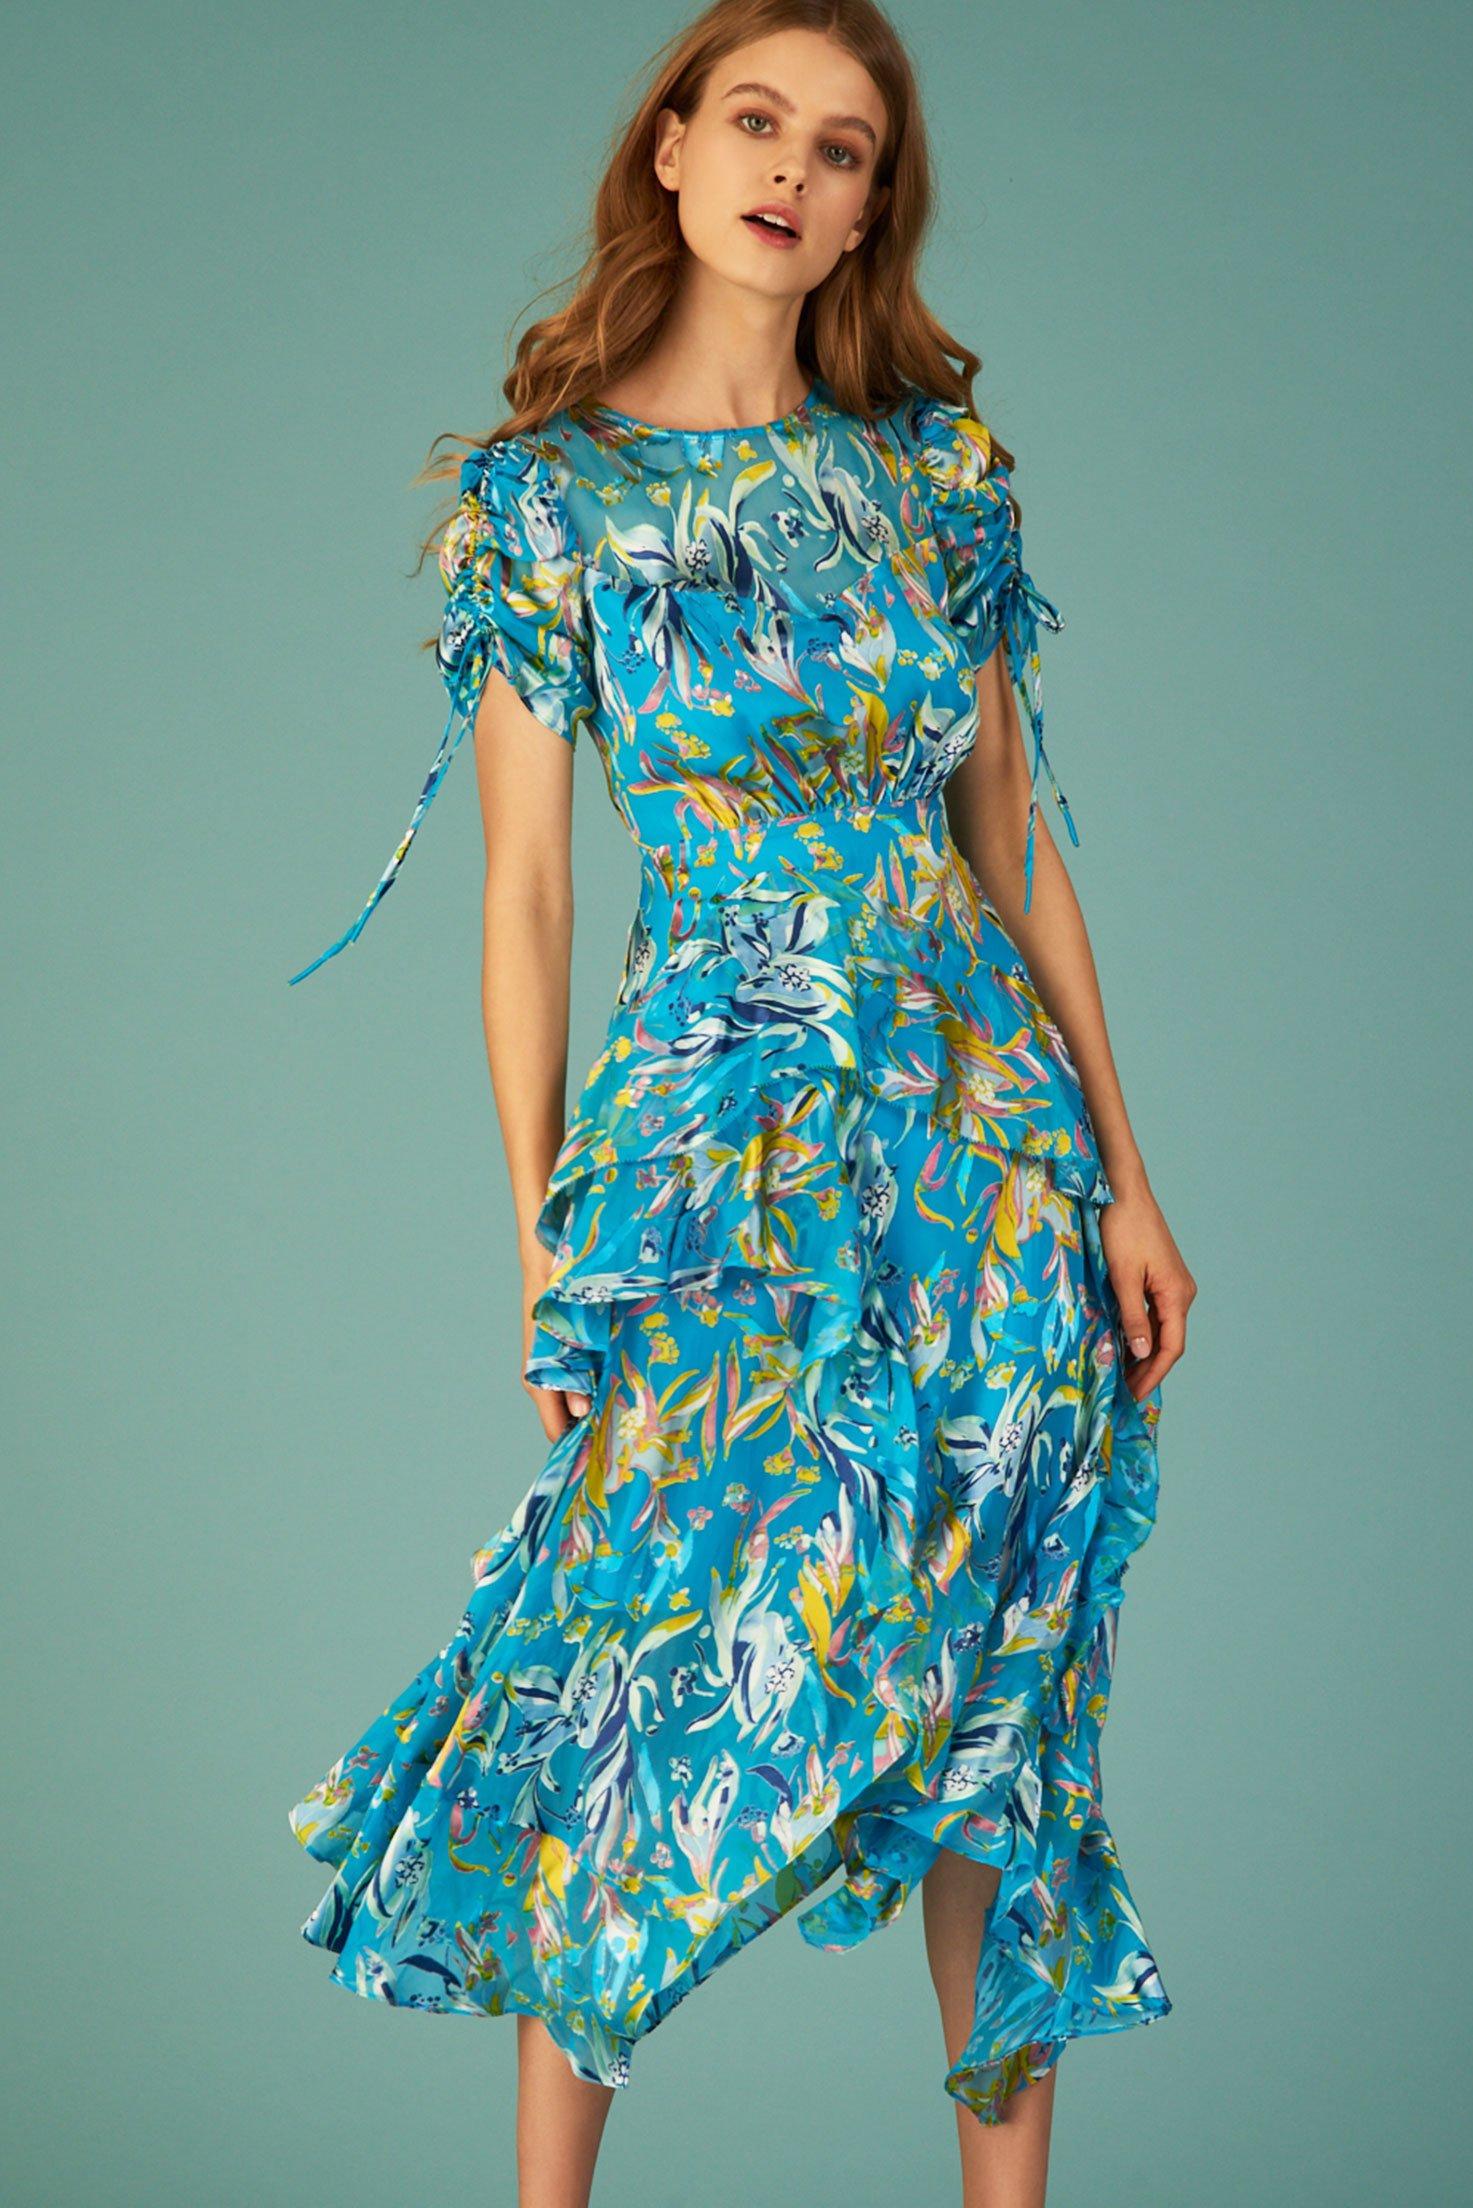 Lyst - Tanya Taylor Cosette Dress in Blue